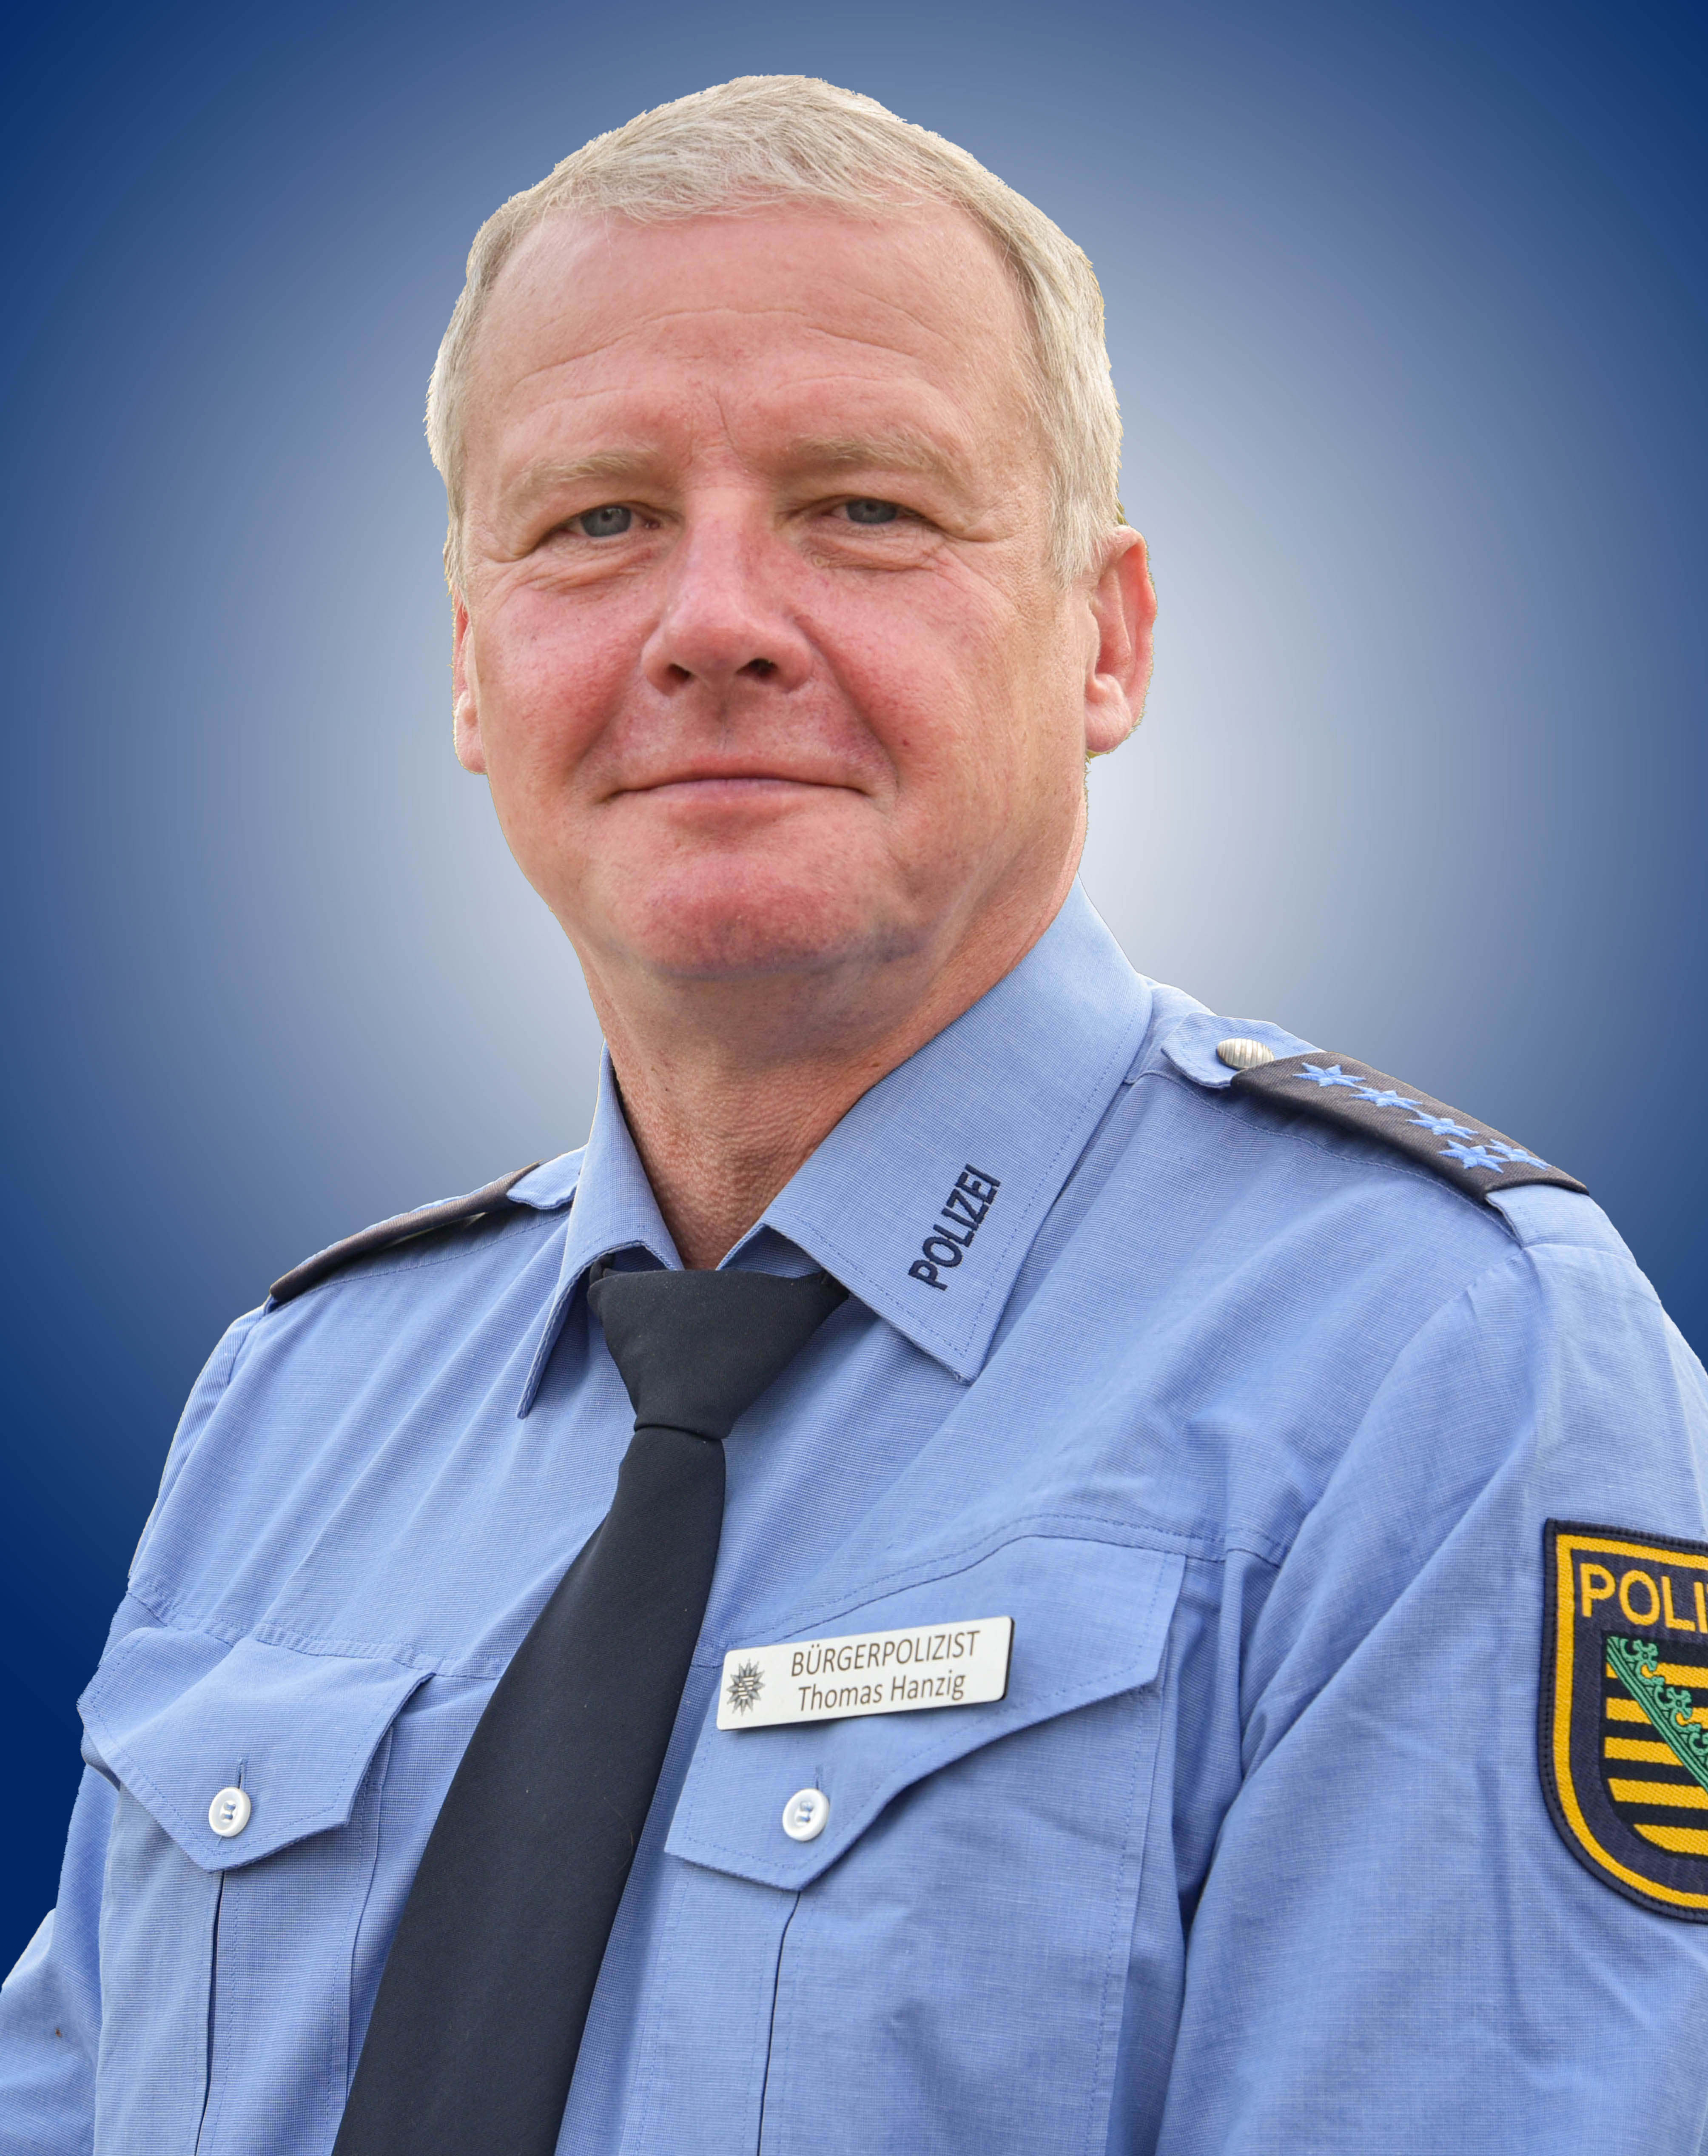 Polizeihauptmeister Thomas Hanzig